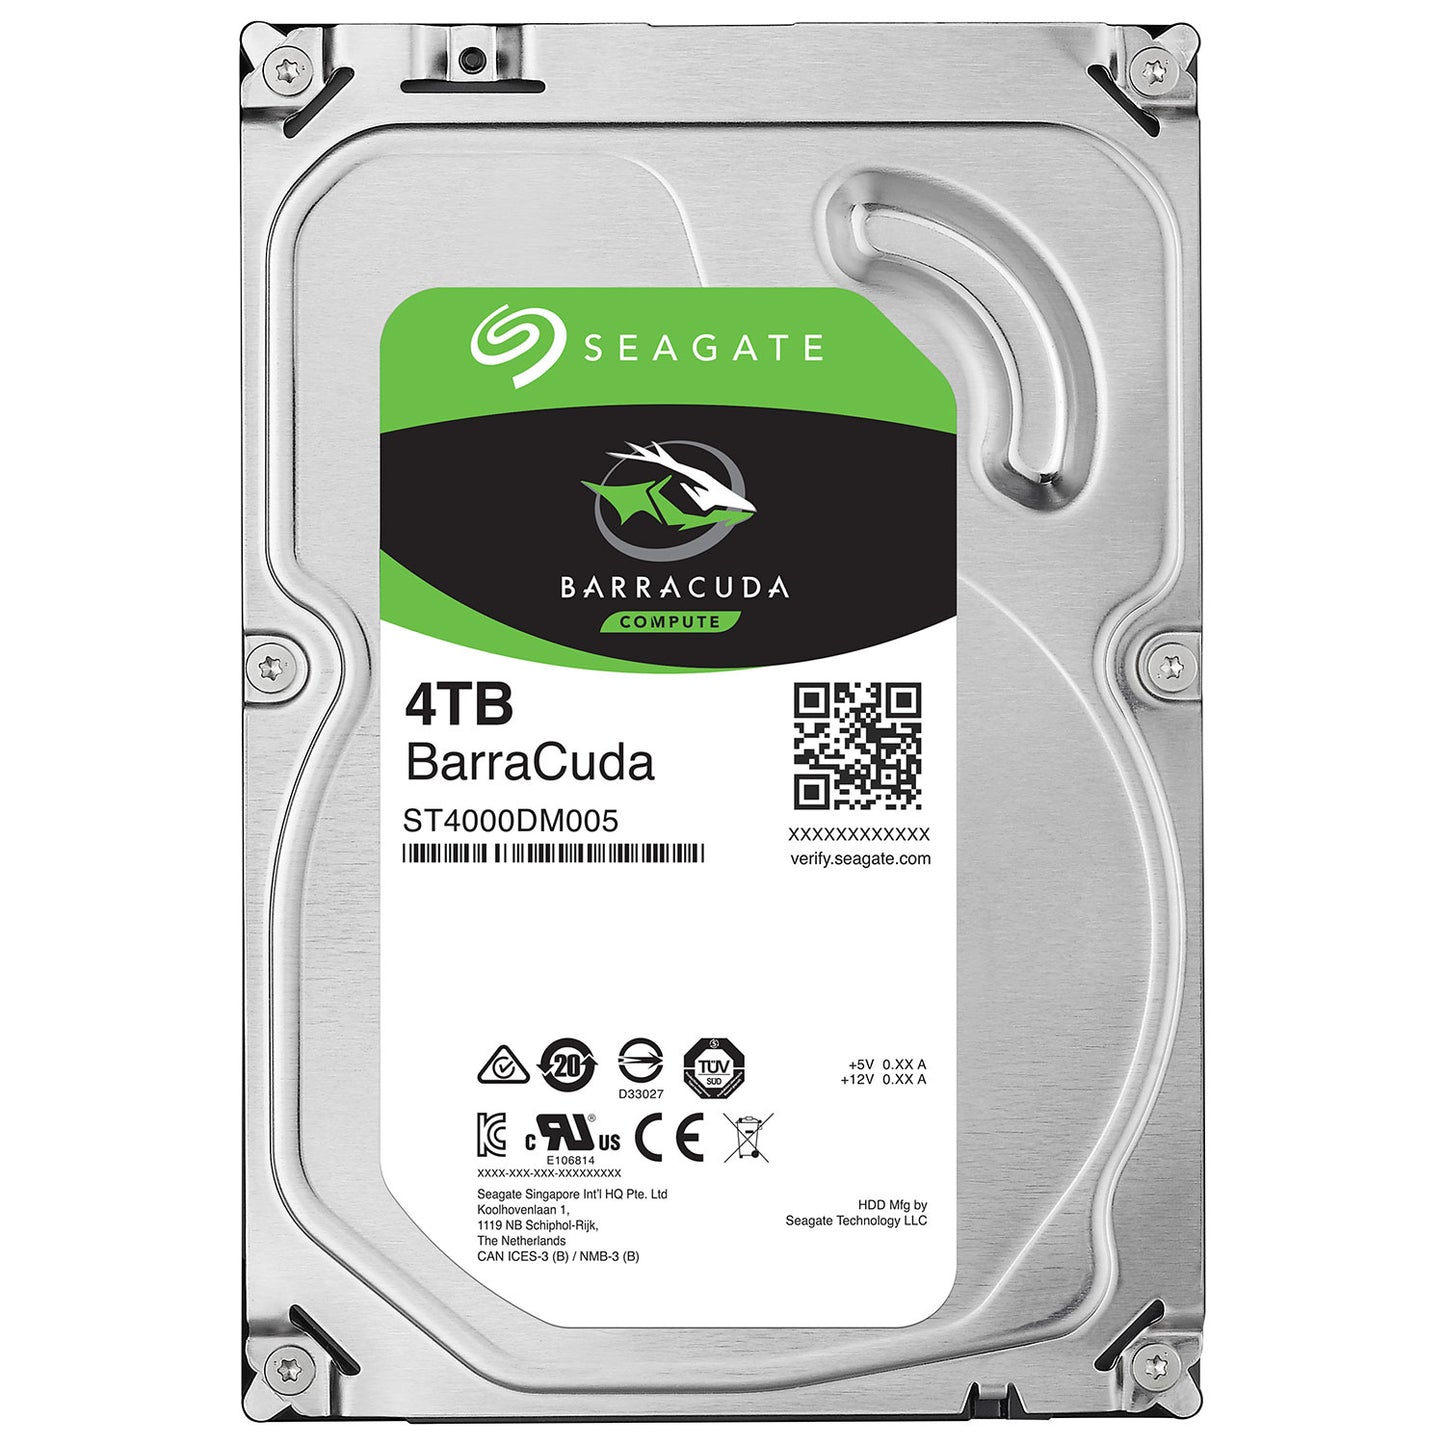 Seagate Barracuda 4TB 3.5" Internal Desktop Hard Disk